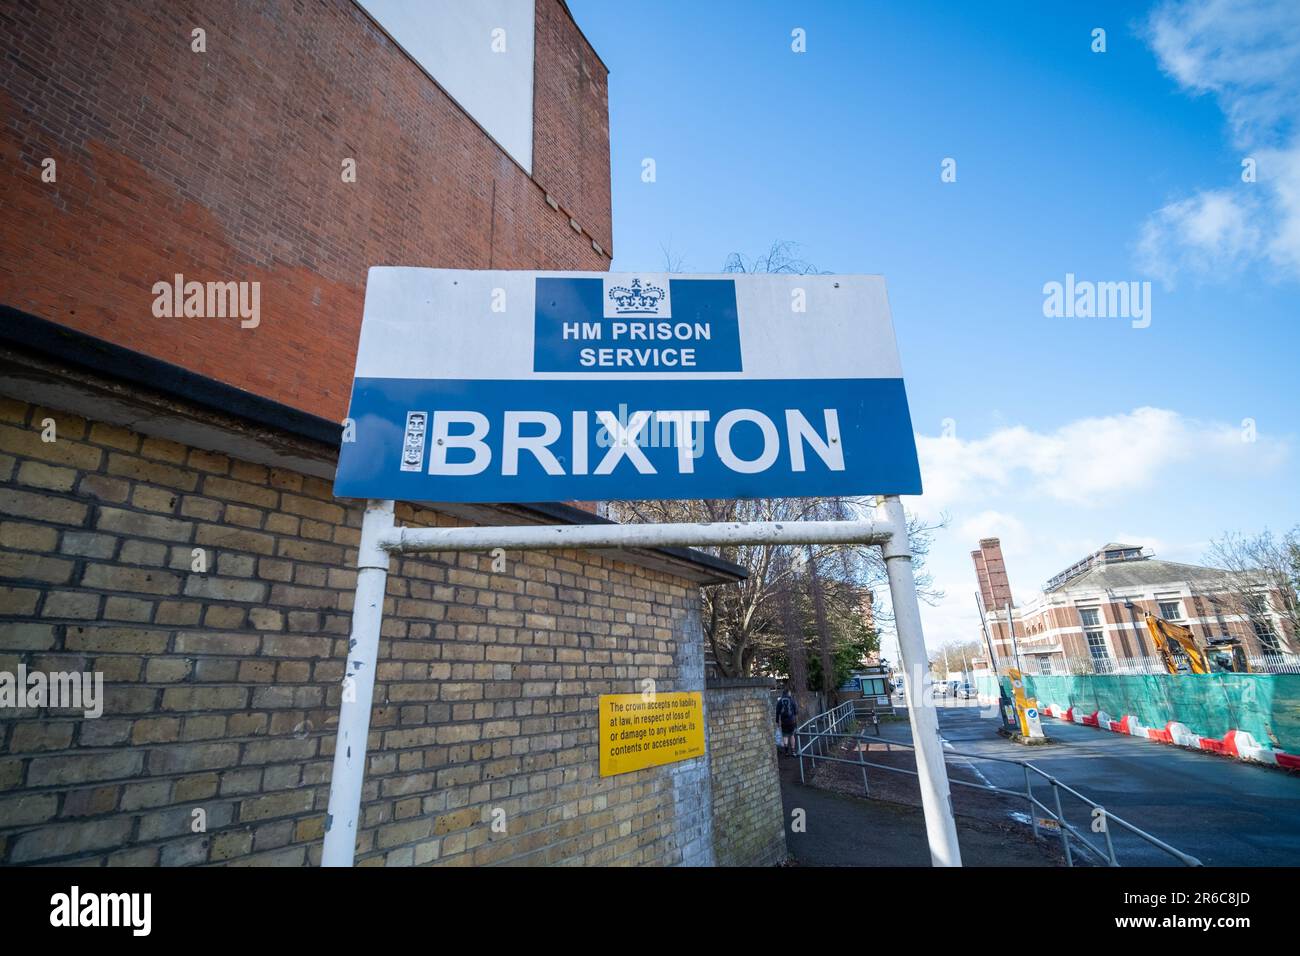 London - HMP Brixton Prison in Brixton, Südwesten von London Stockfoto